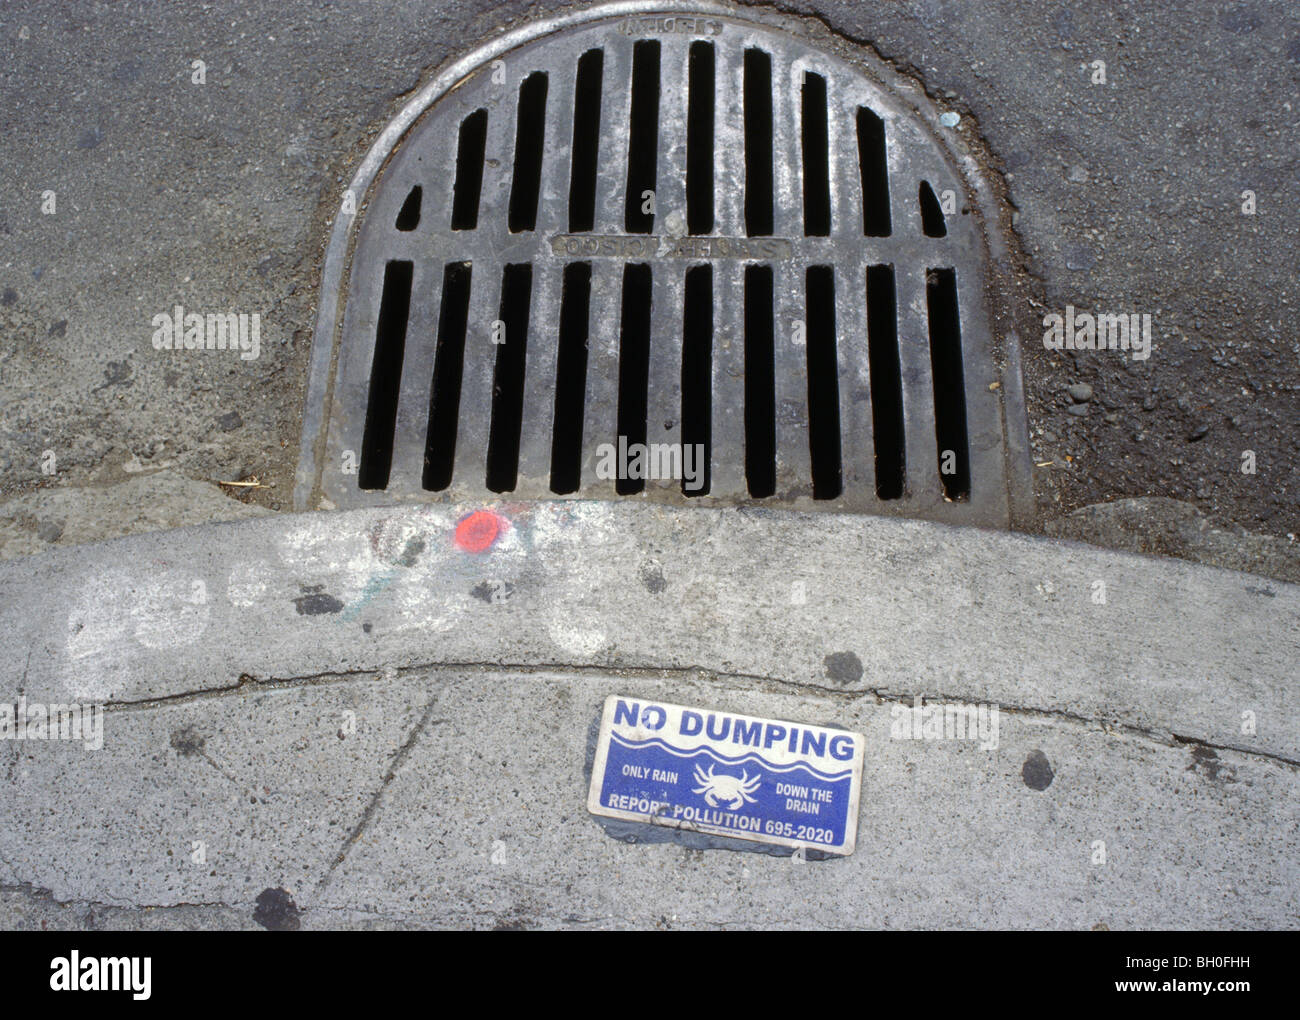 no dumping into storm drain, warning sign. Red spray paint mosquito abatement mark, San Francisco, California, USA Stock Photo